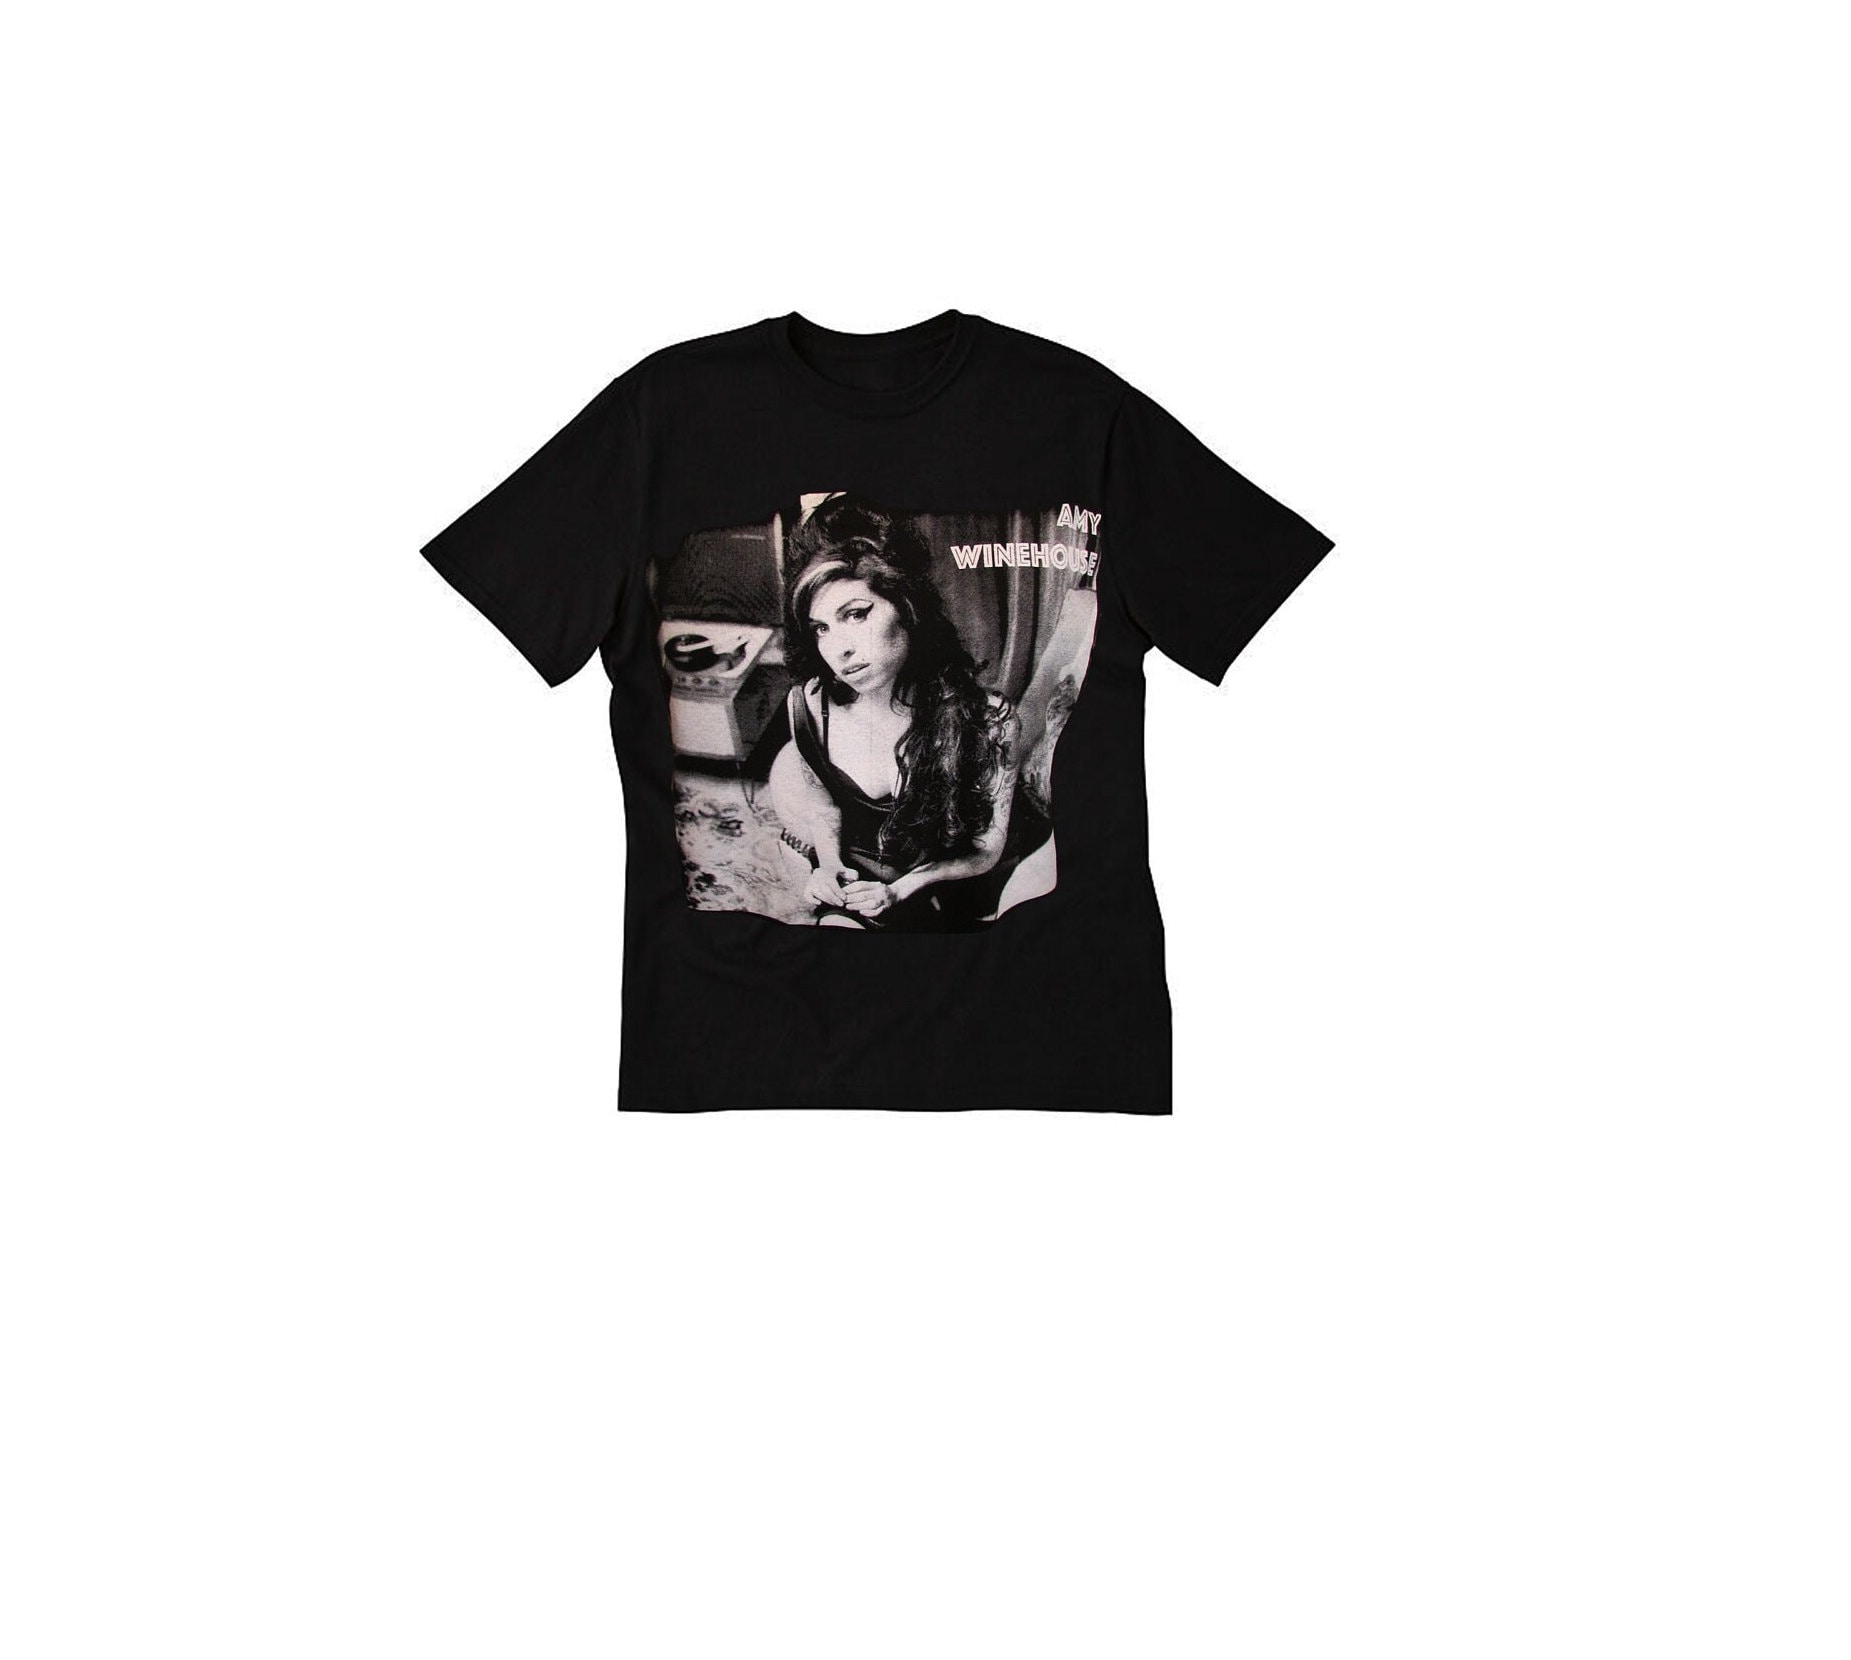 Discover Punk rock band Amy Winehouse#1 T-shirt